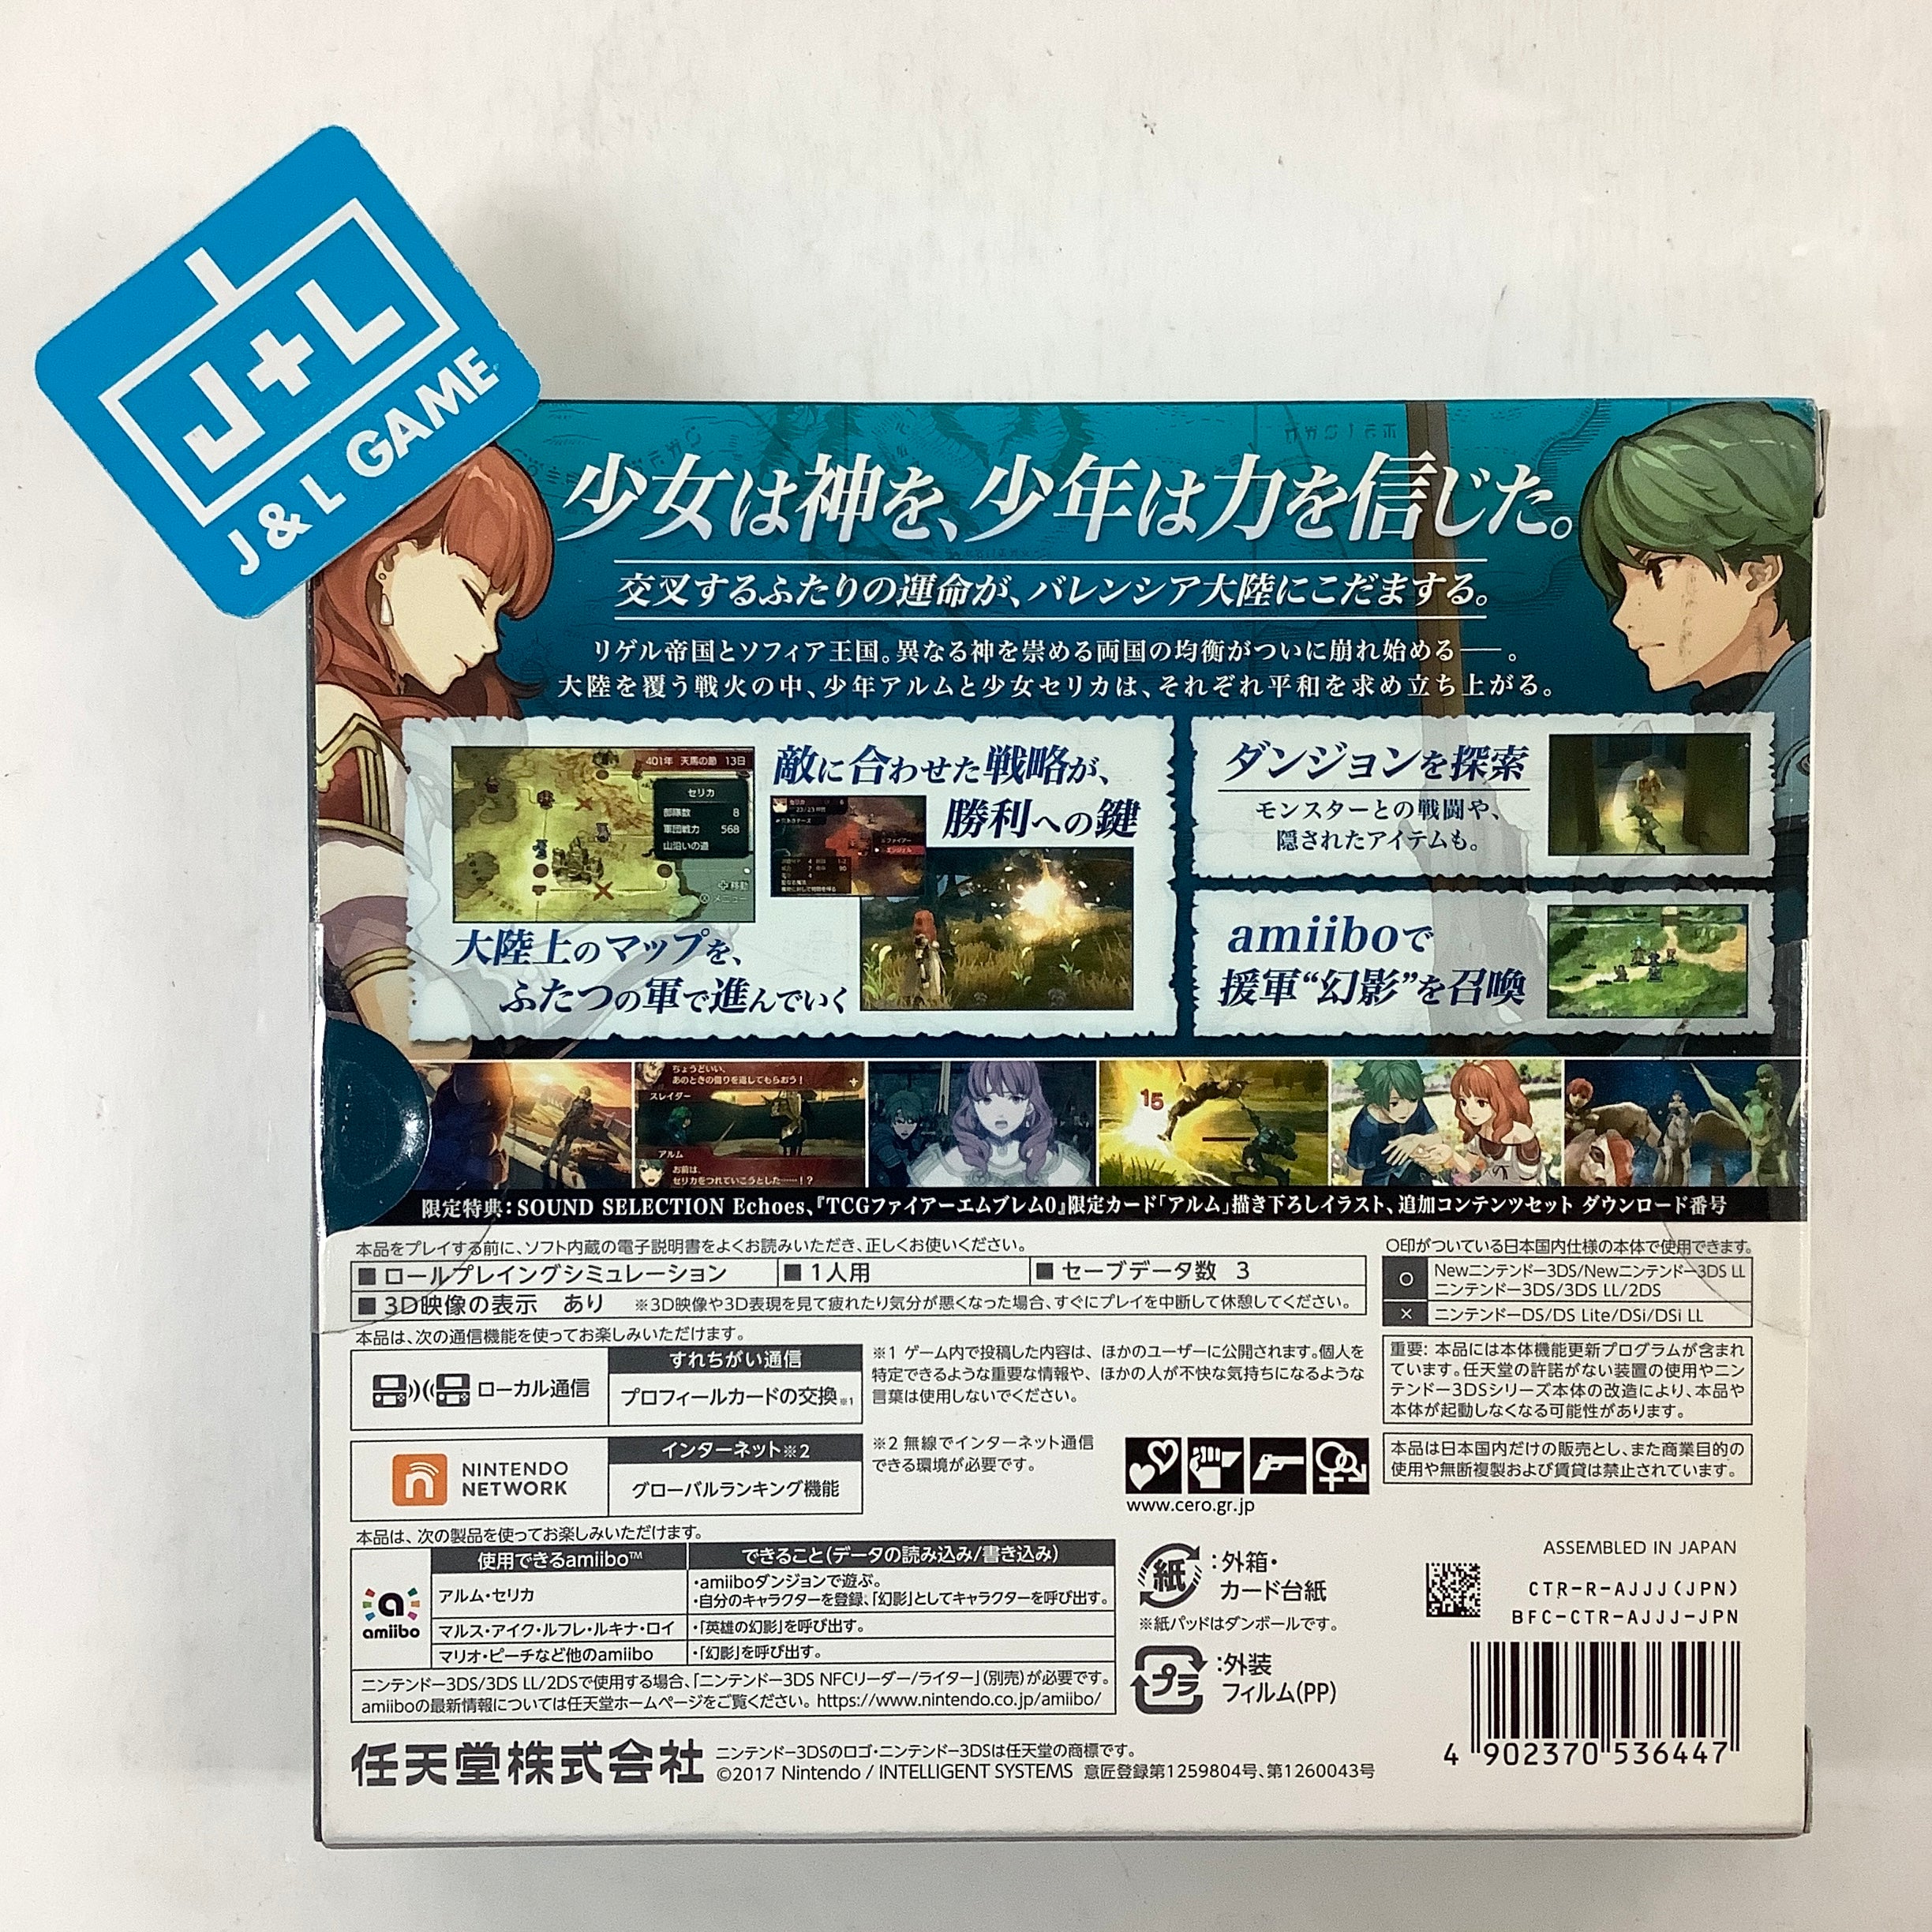 Fire Emblem Echoes: Mo Hitori no Eiyuu-ou (Limited Edition) - Nintendo 3DS (Japanese Import) Video Games Nintendo   